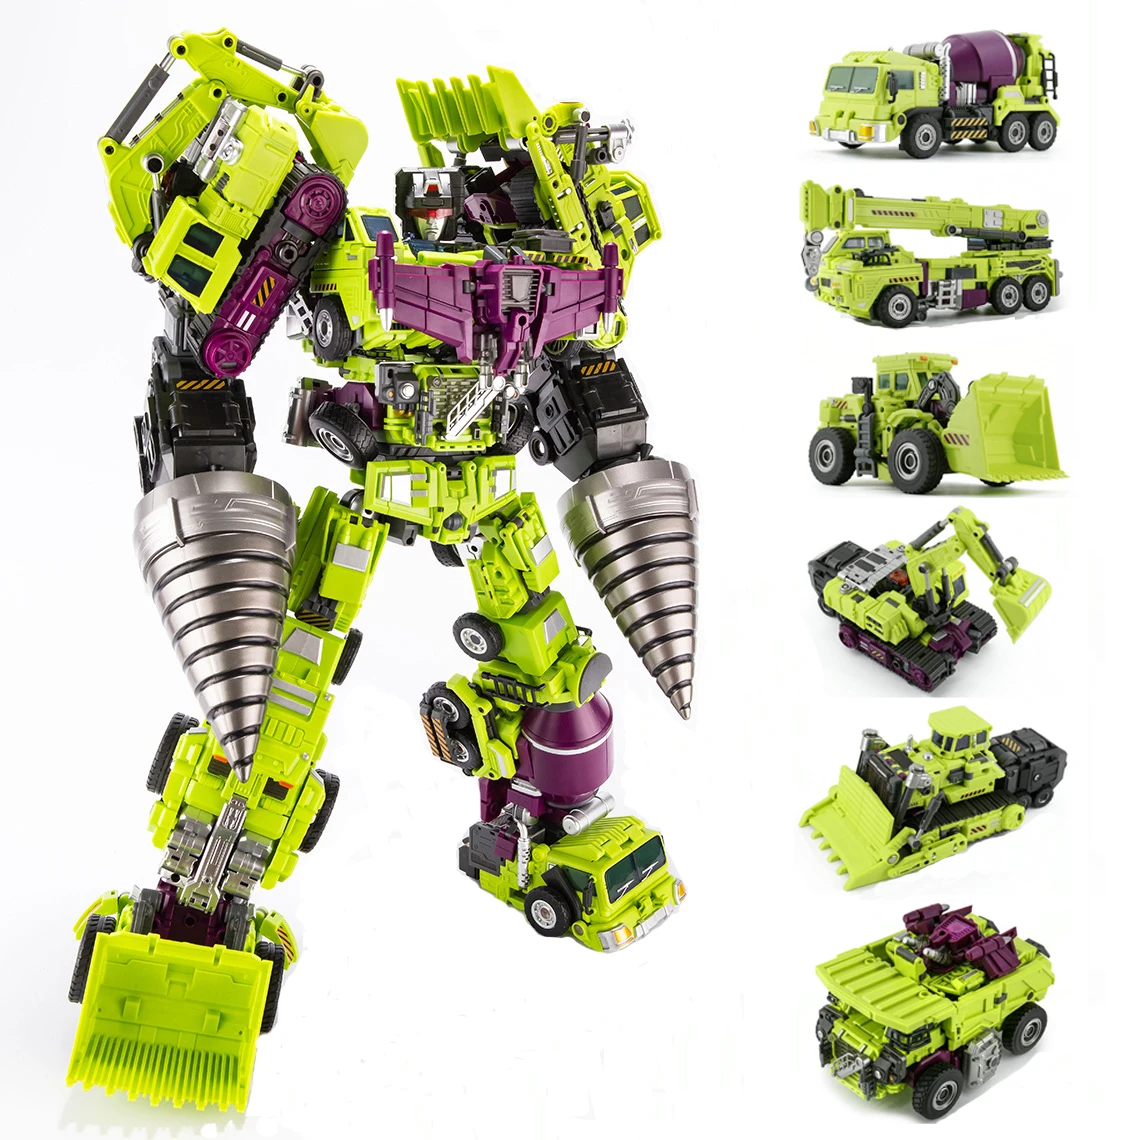 WJ Oversized Transformers Devastator Robots Action Figure 15" Toy New 